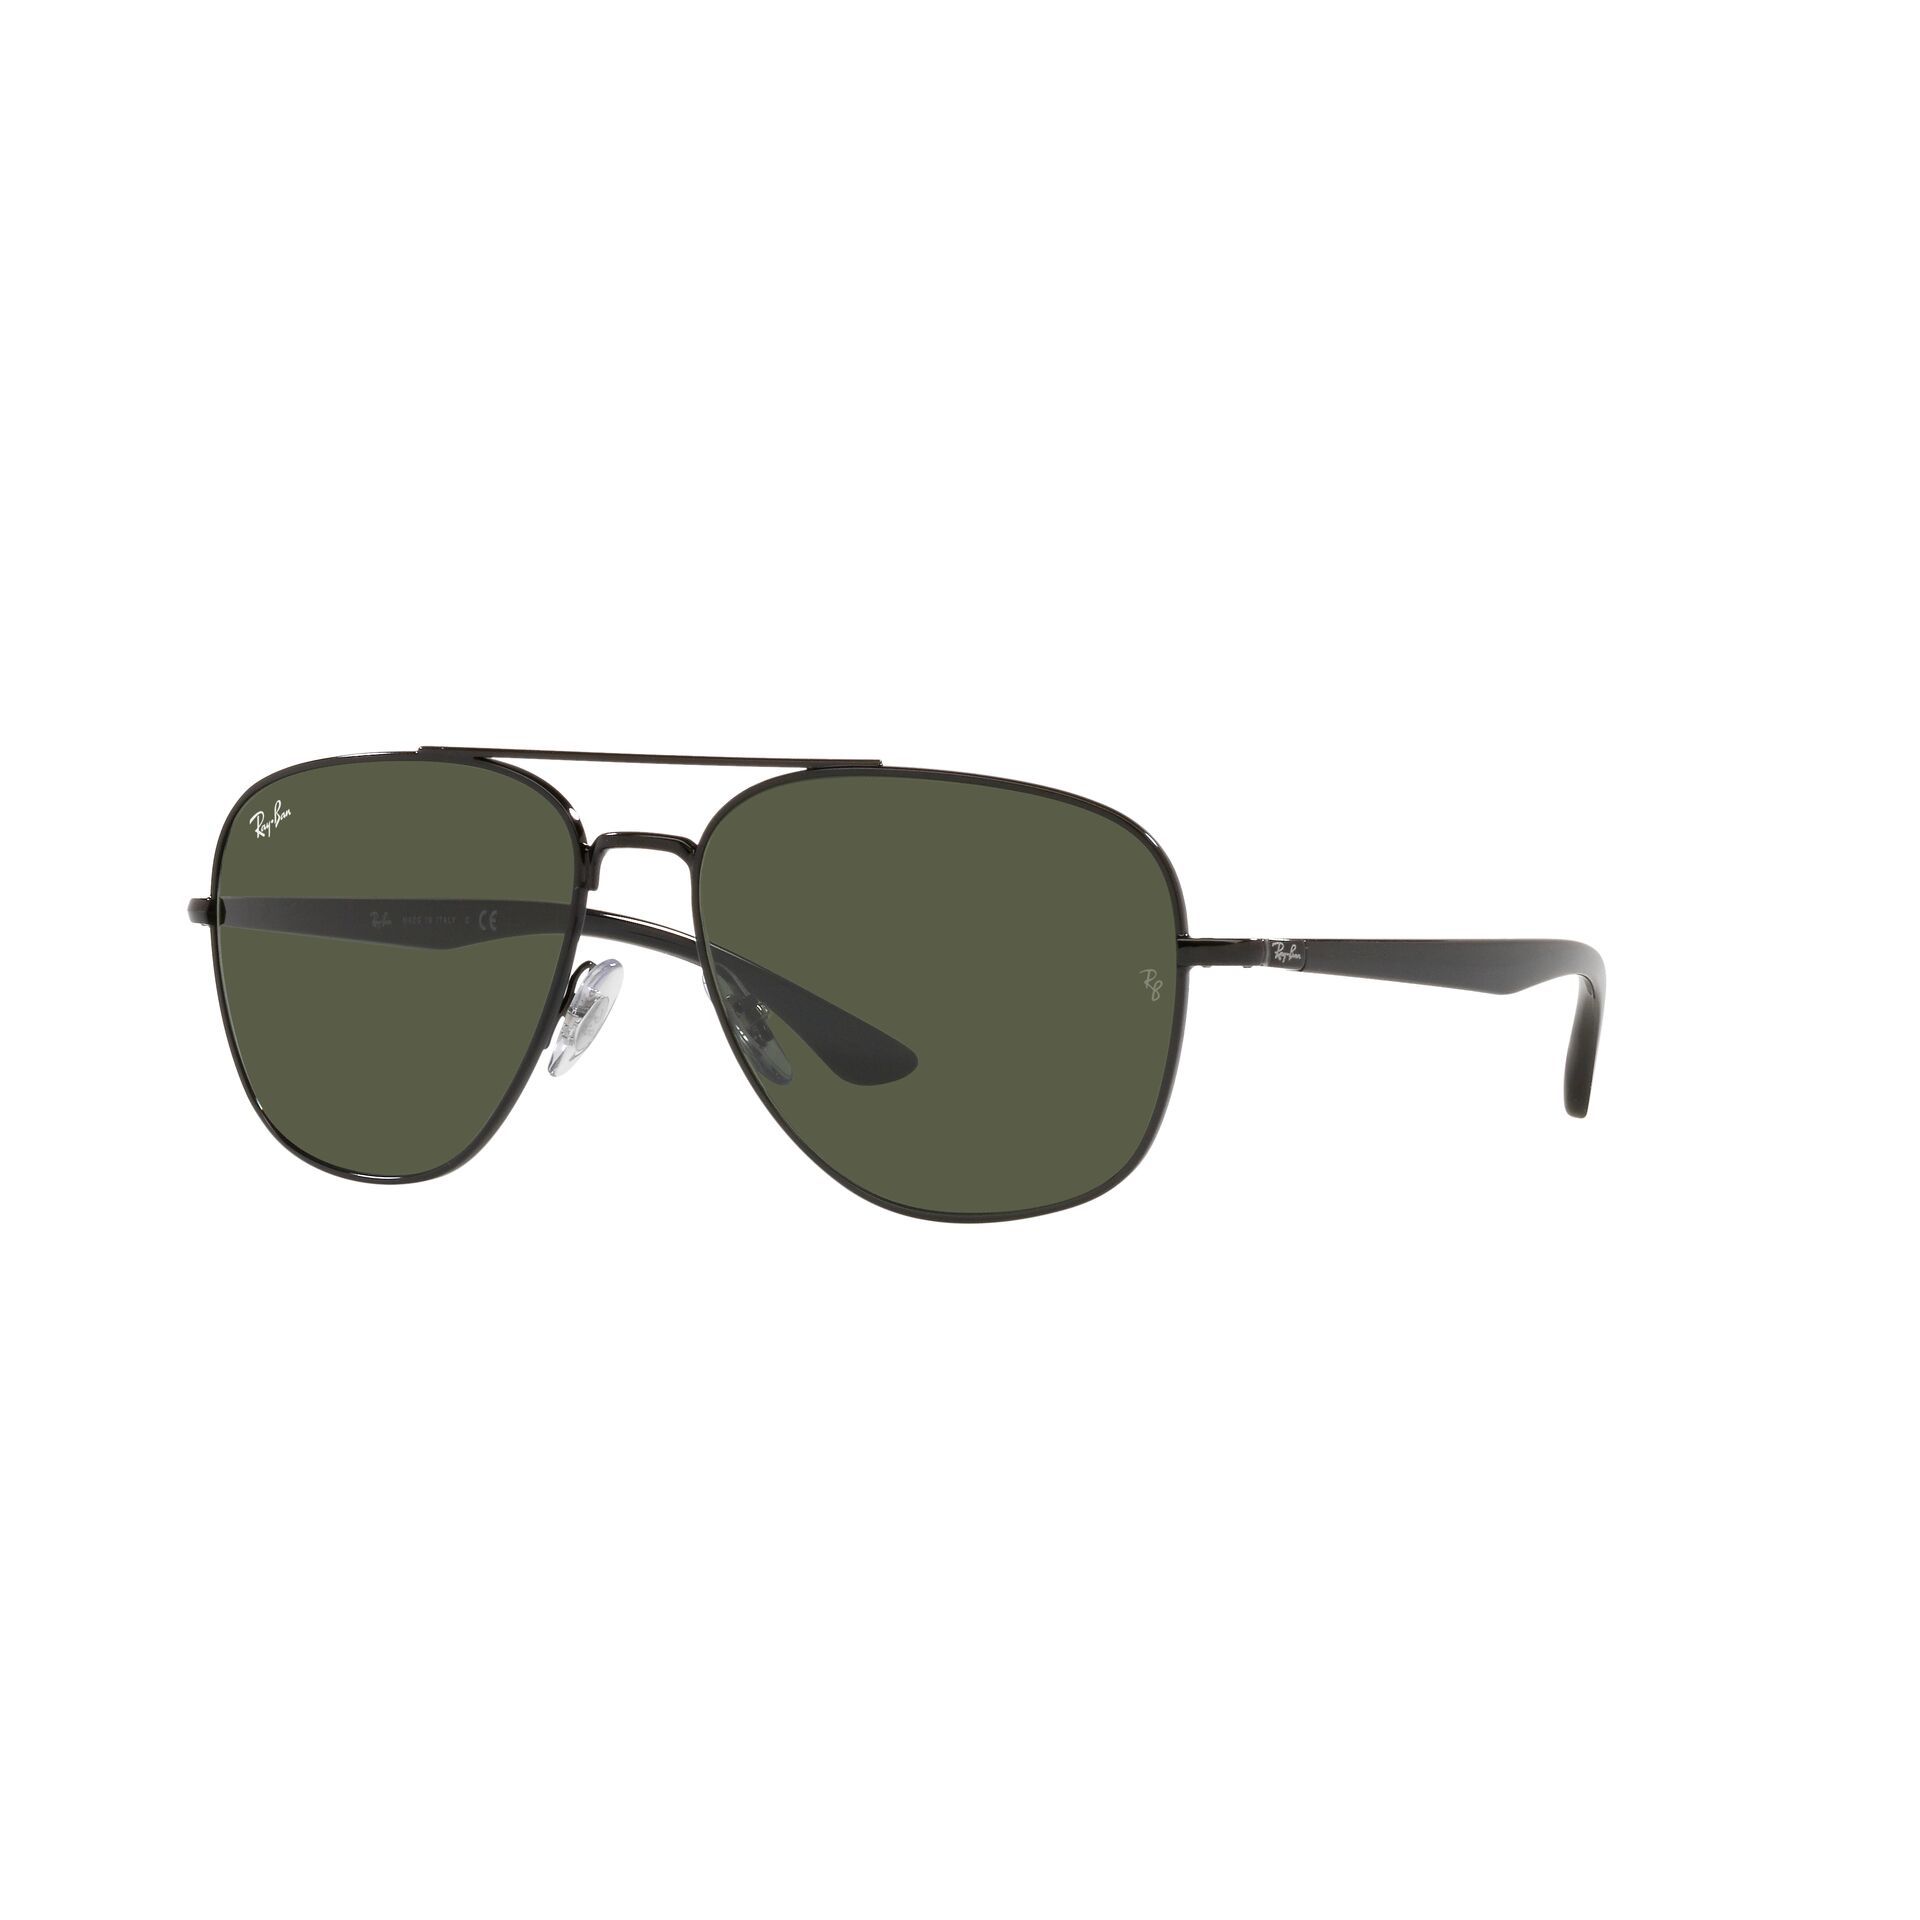 RB3683 Square Sunglasses 002 31 - size 56